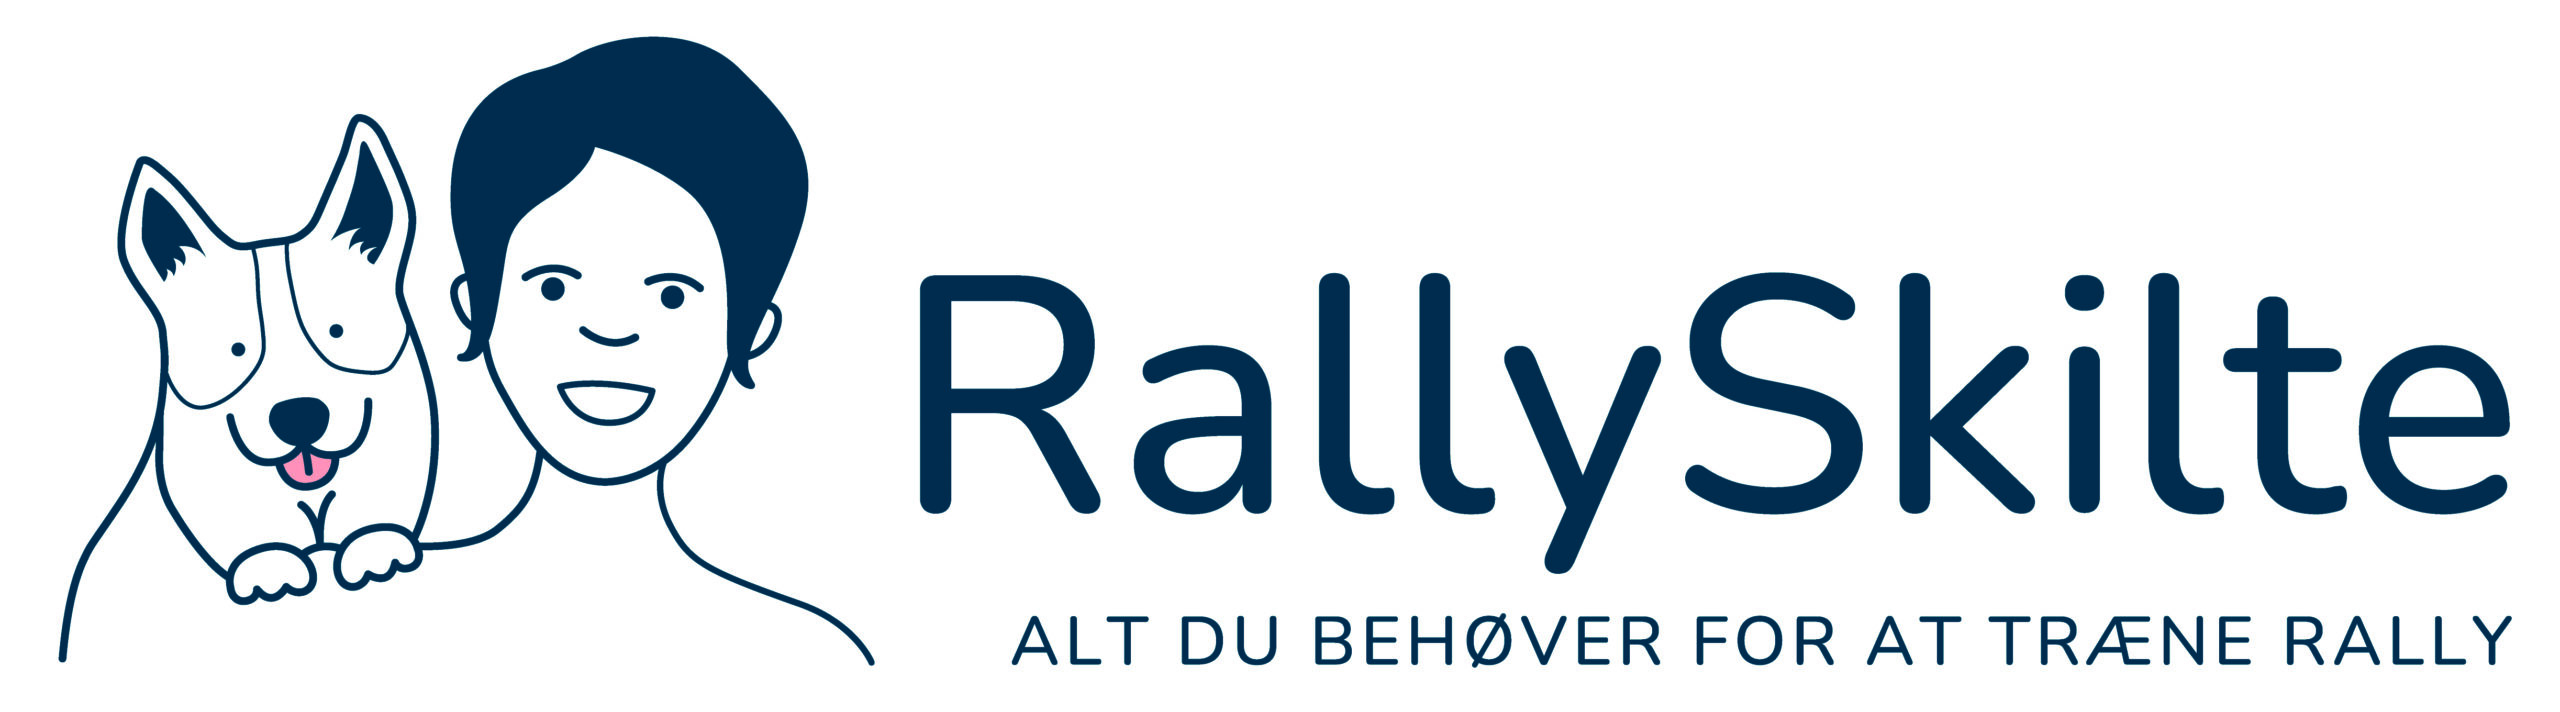 Rally skilte | DKK, FCI & DcH | Hundesport